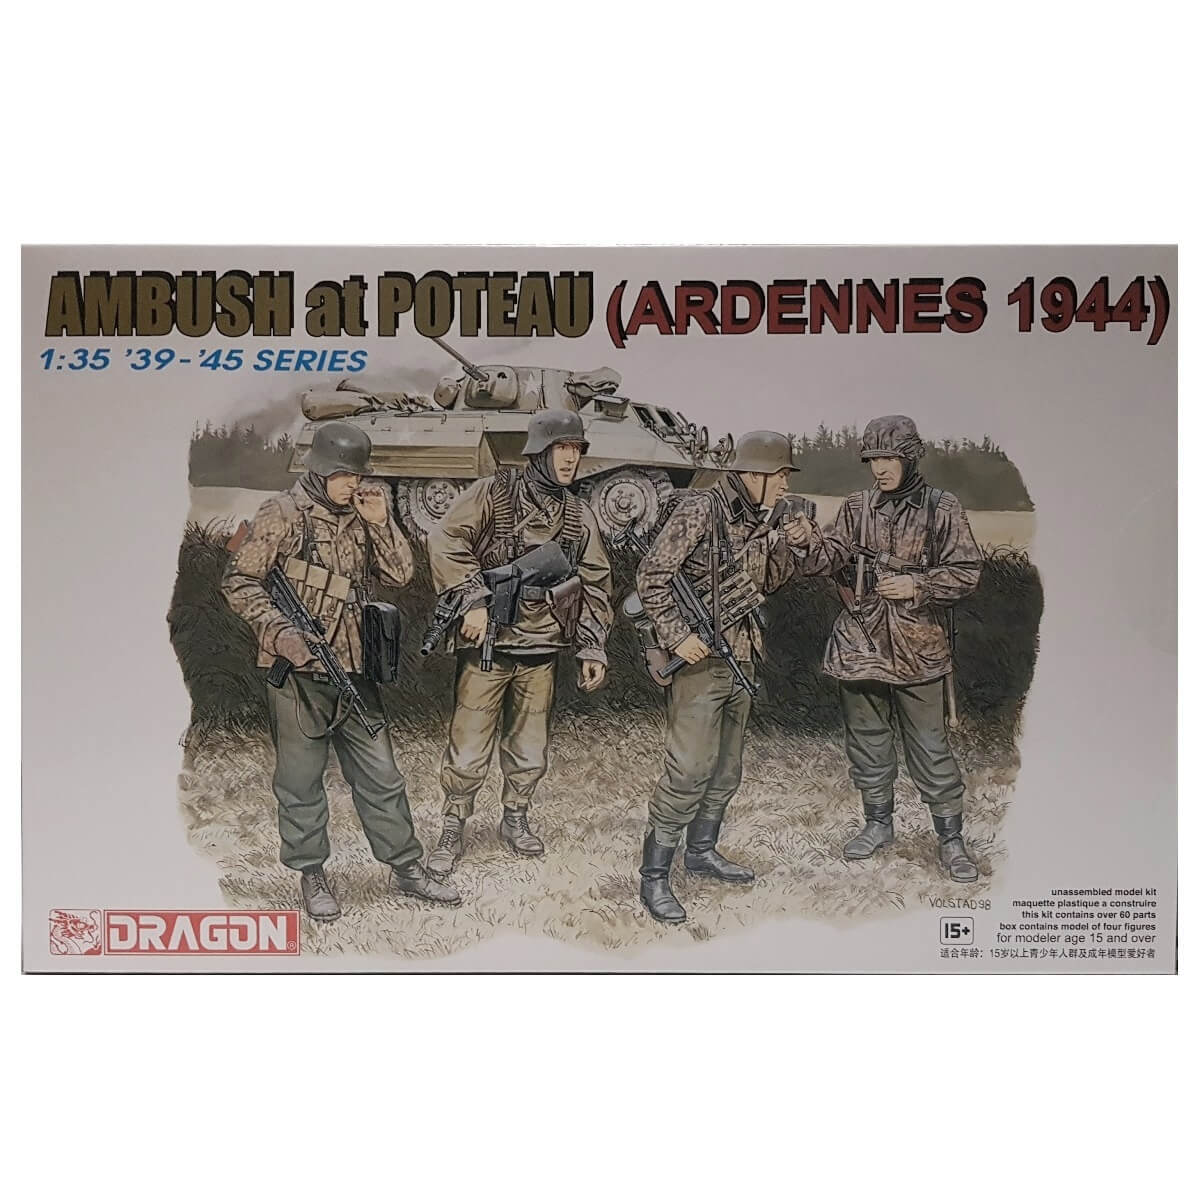 1:35 Ambush at Poteau - Ardennes 1944 - DRAGON